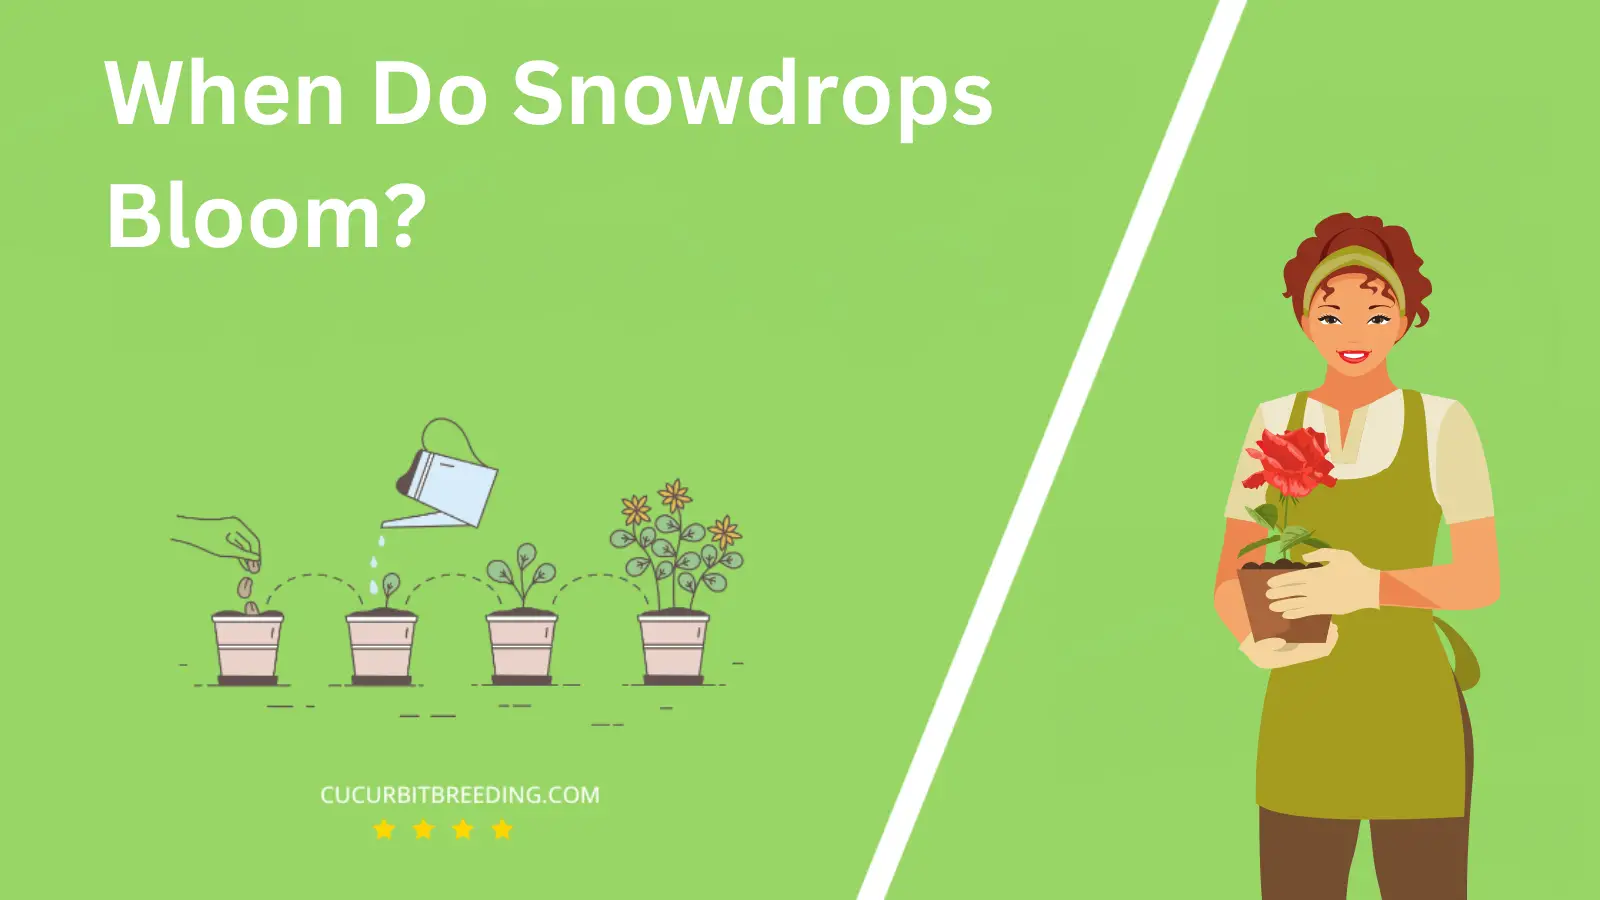 When Do Snowdrops Bloom?